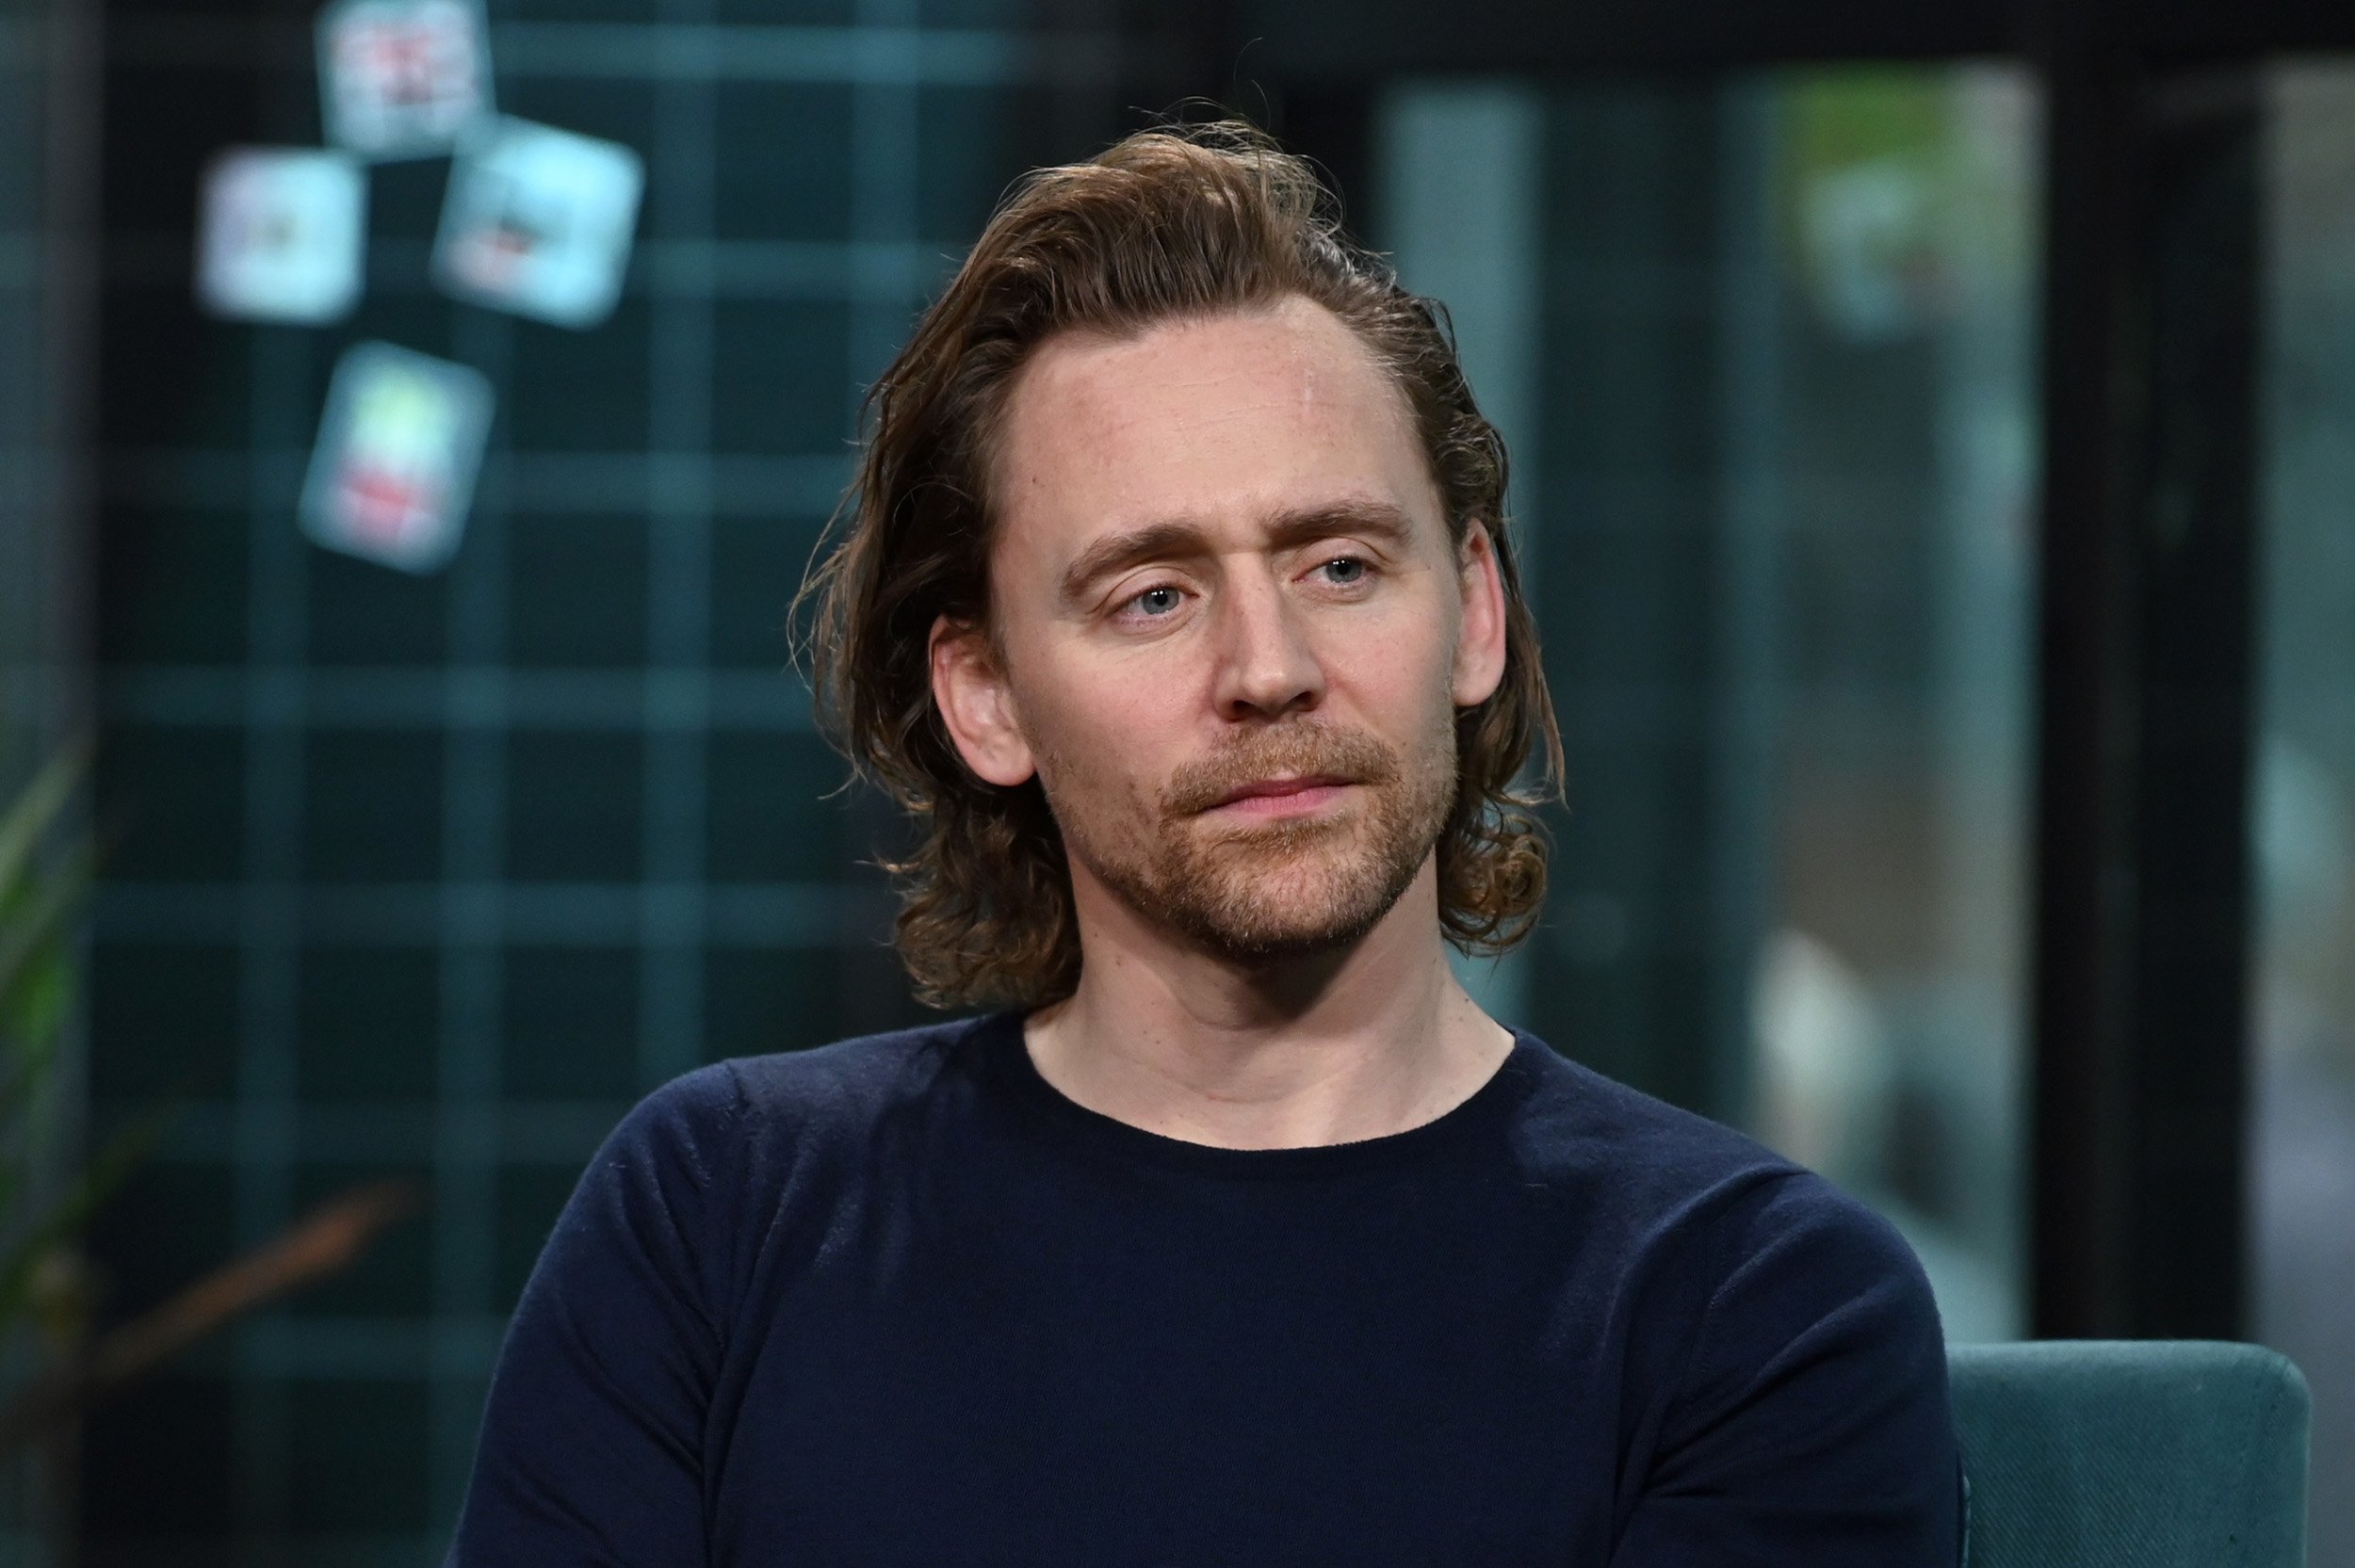 ‘Loki’: How Old Is Tom Hiddleston?